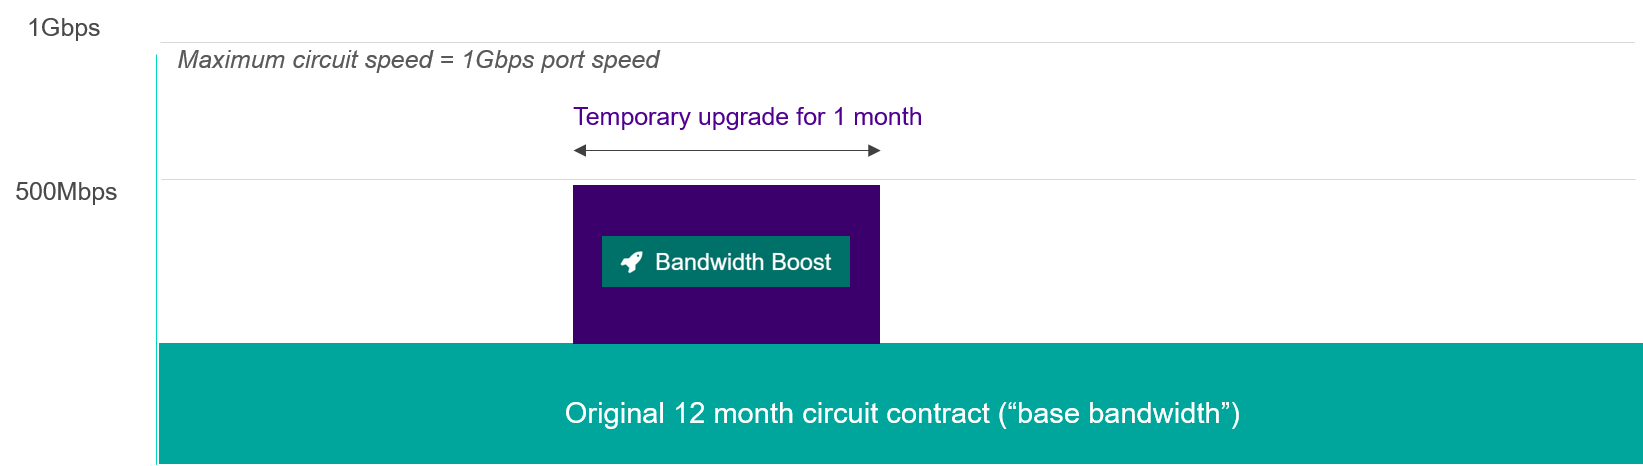 Bandwidth boost 4